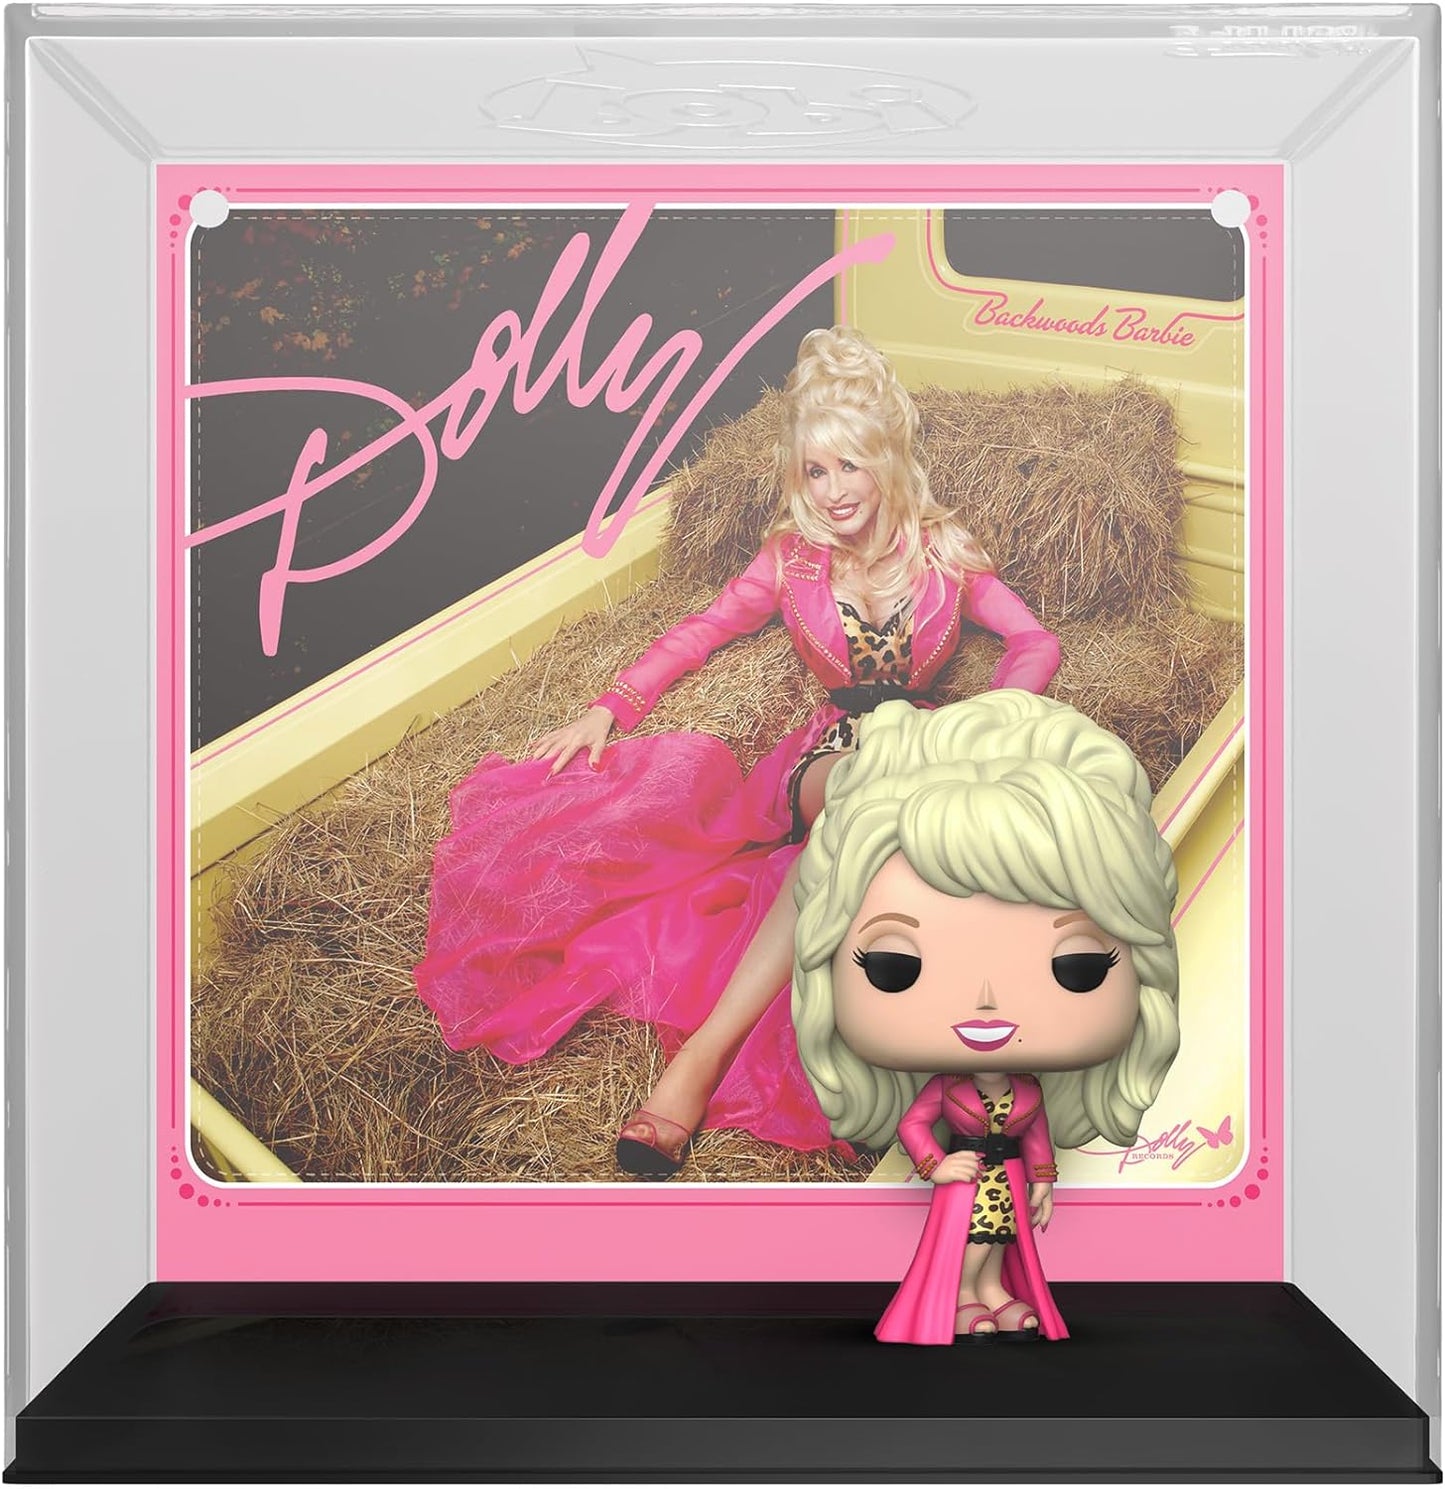 Funko Pop  Albums  Dolly Parton - Backwoods Barbie